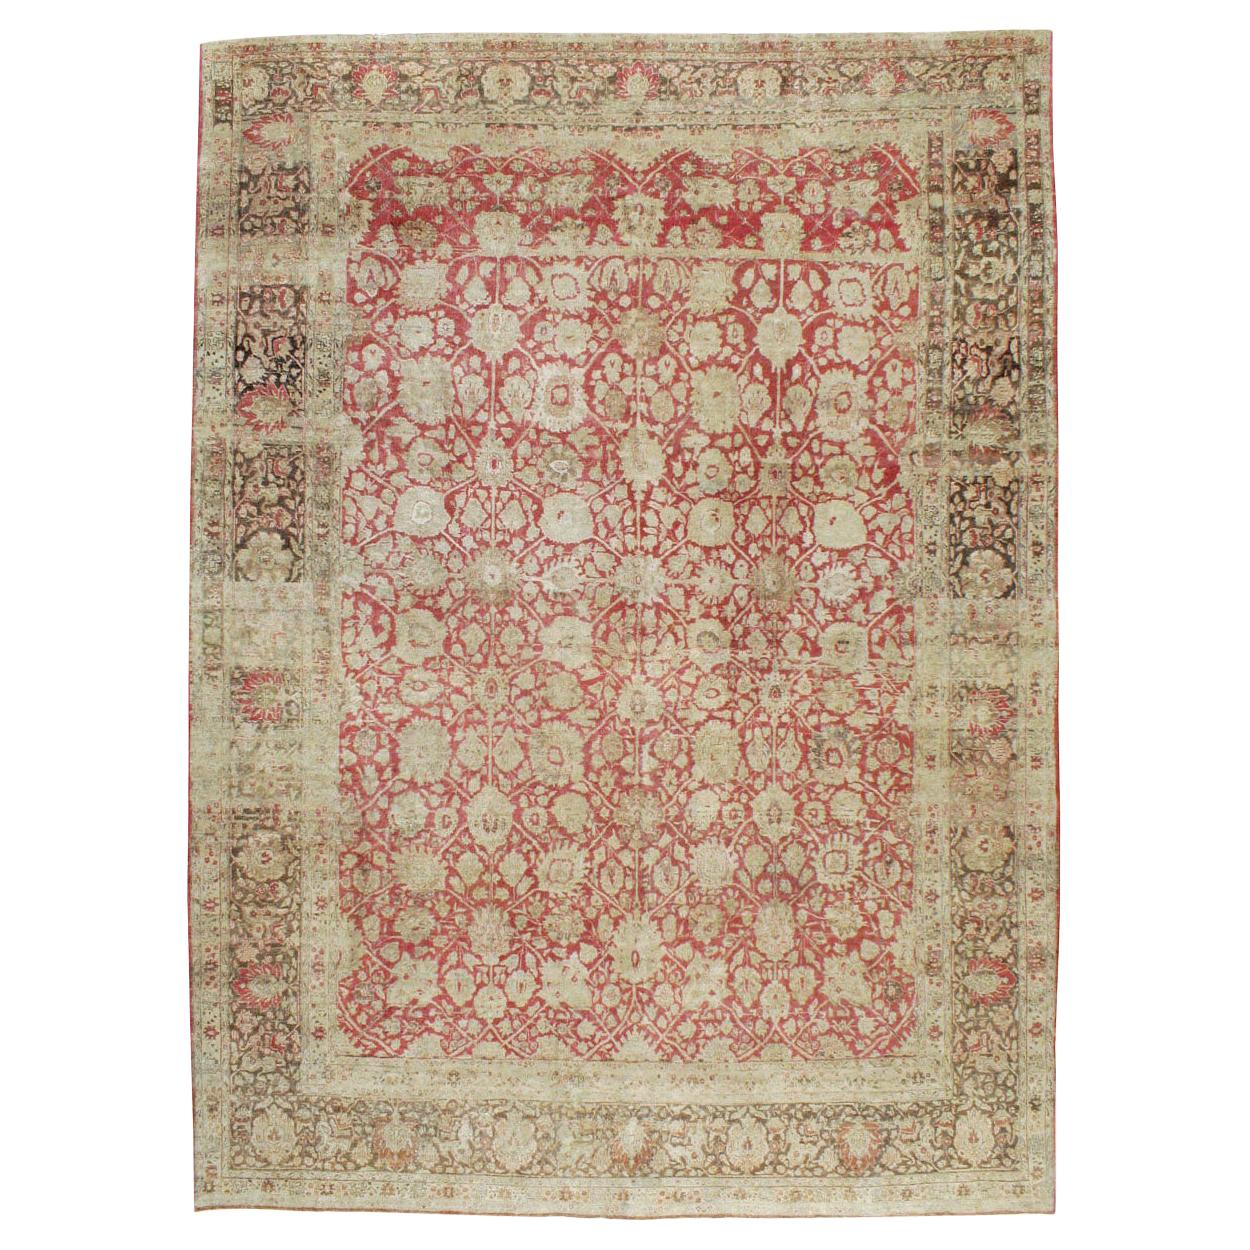 Early 20th Century Handmade Persian Tabriz Large Room Size Carpet